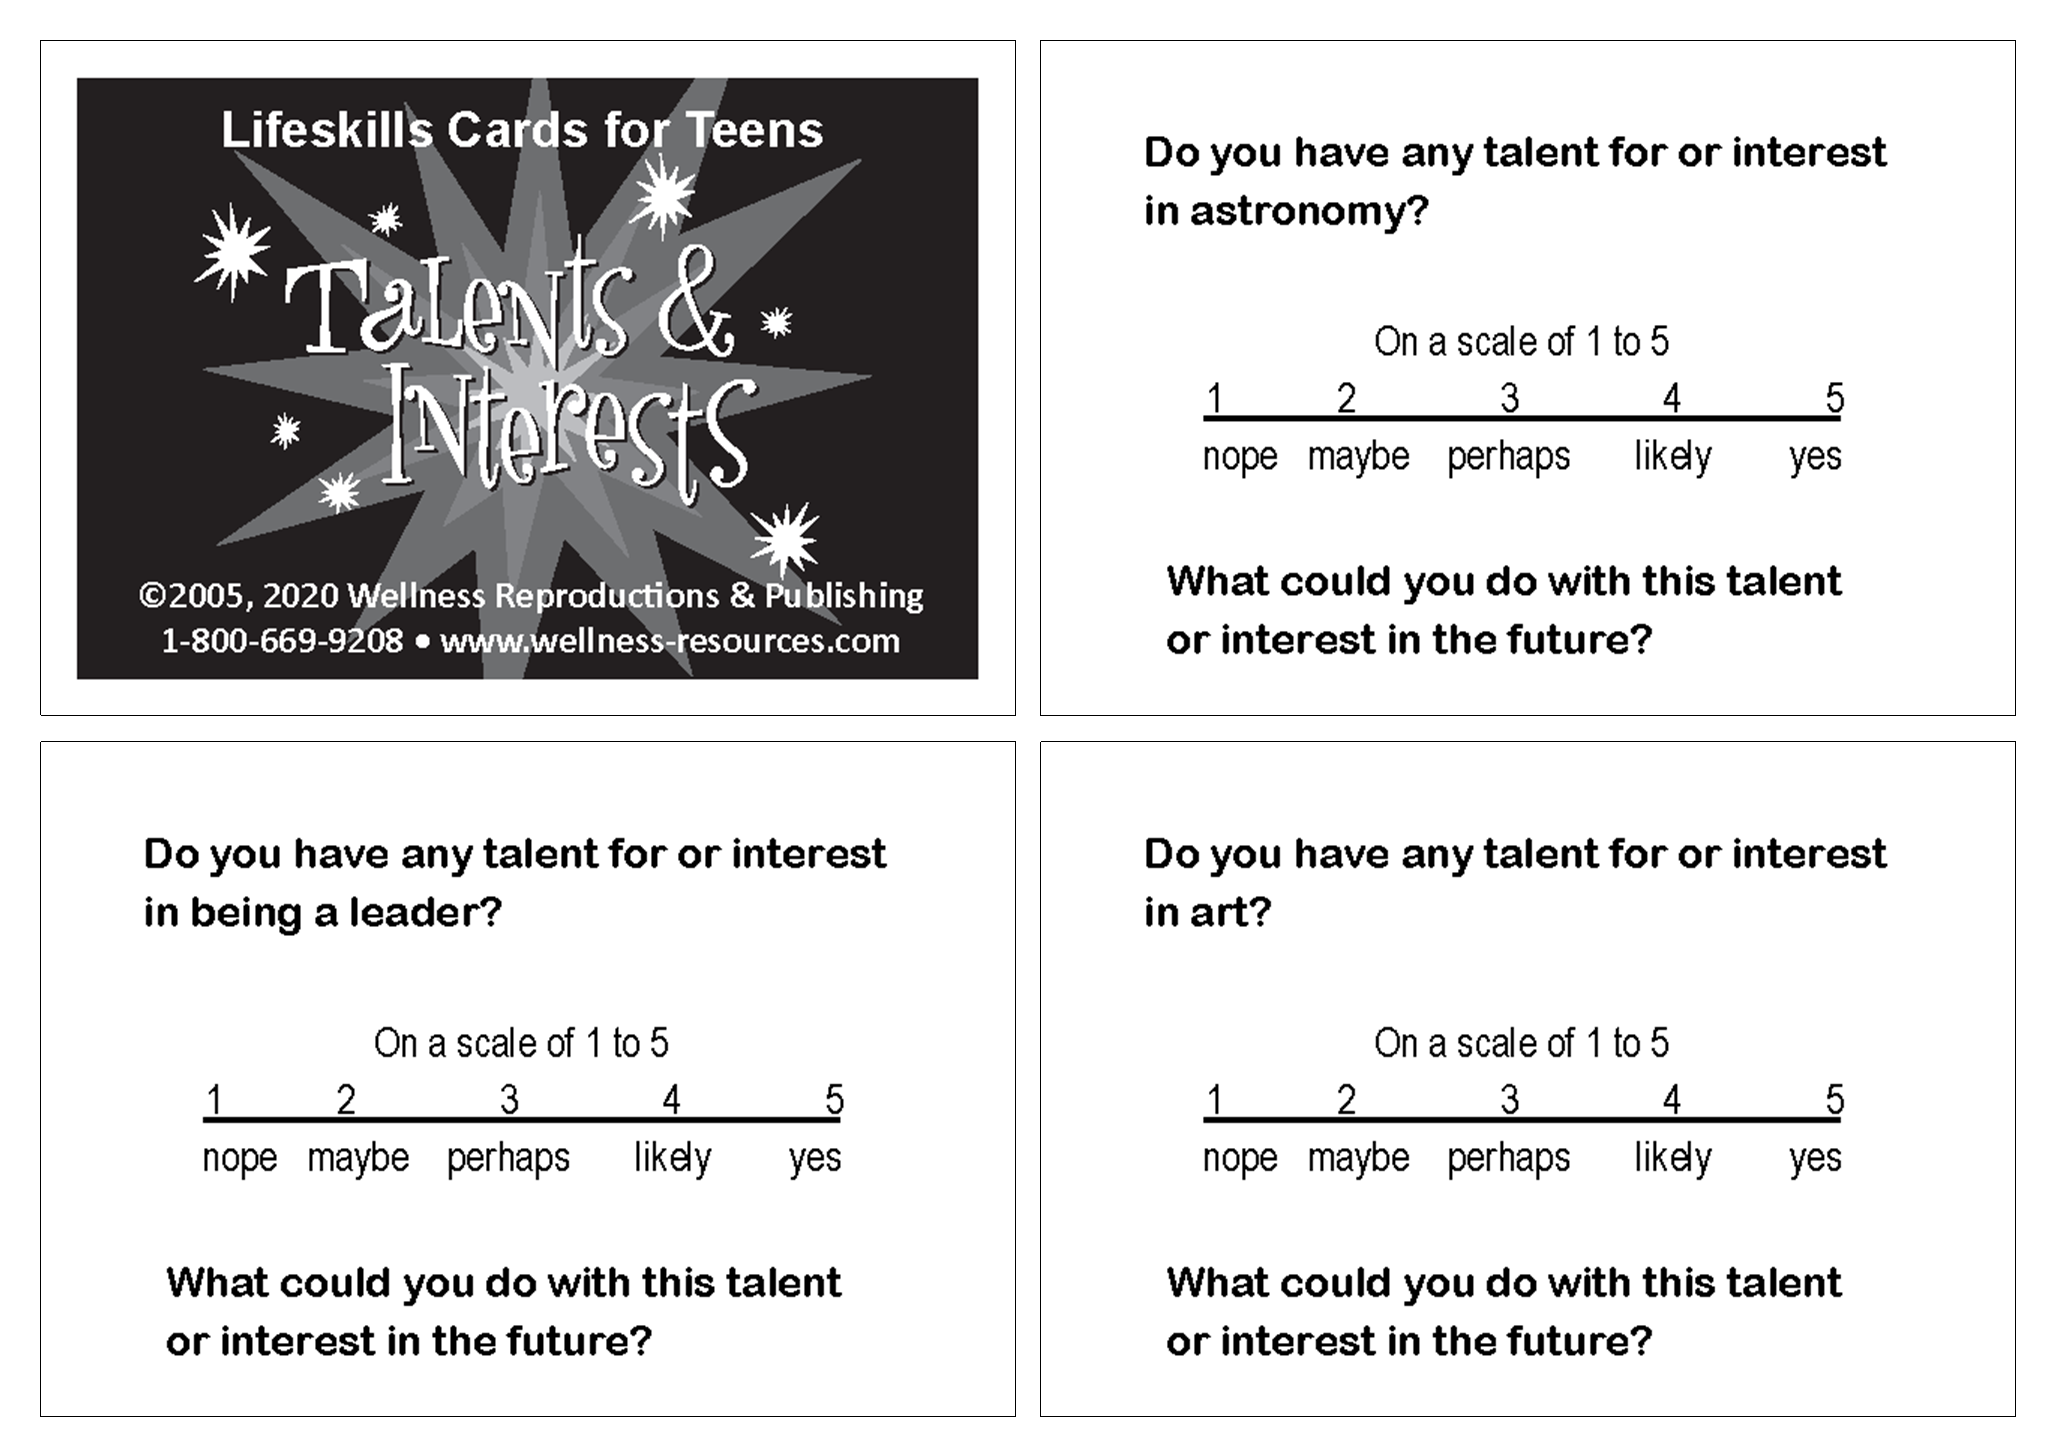 Lifeskills Cards for Teens: Talents & Interests